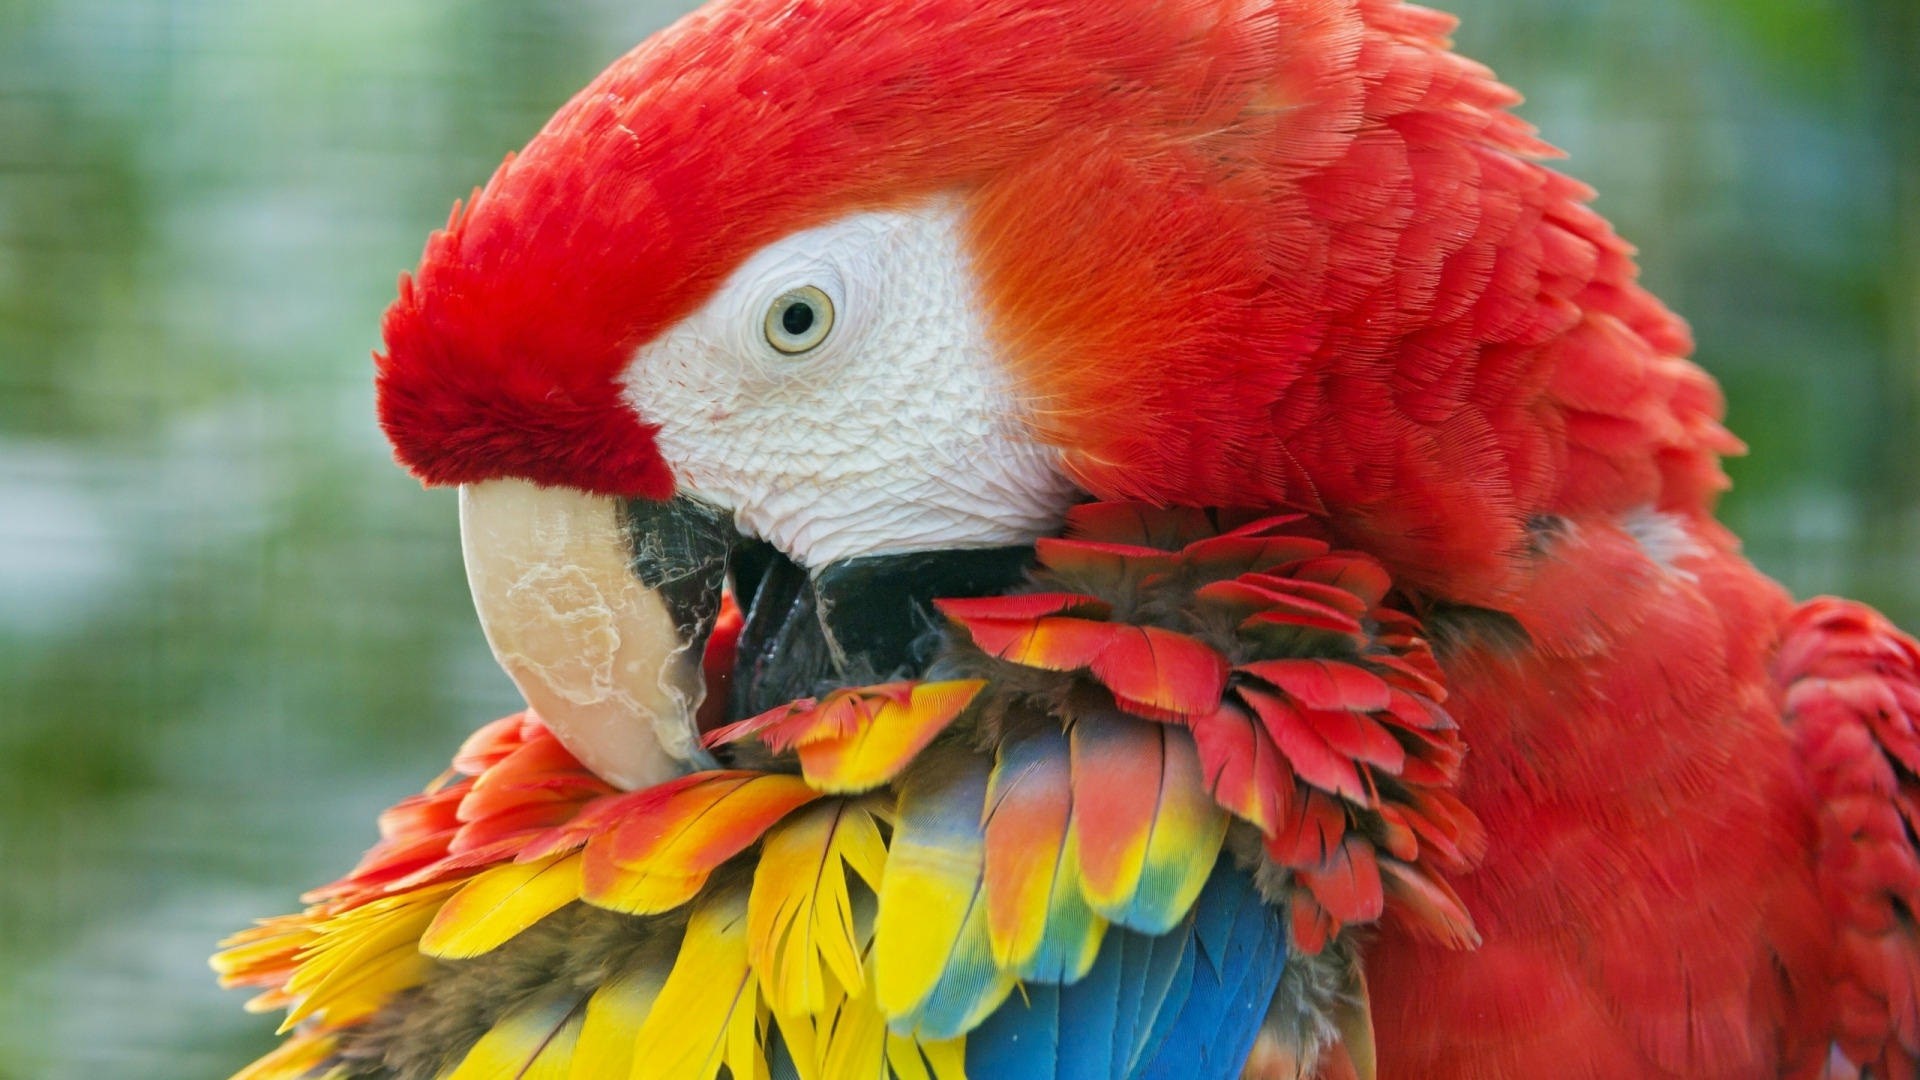 Beautiful Red Parrot Bird Hd Wallpaper - Parrot Hd Images Free Download - HD Wallpaper 